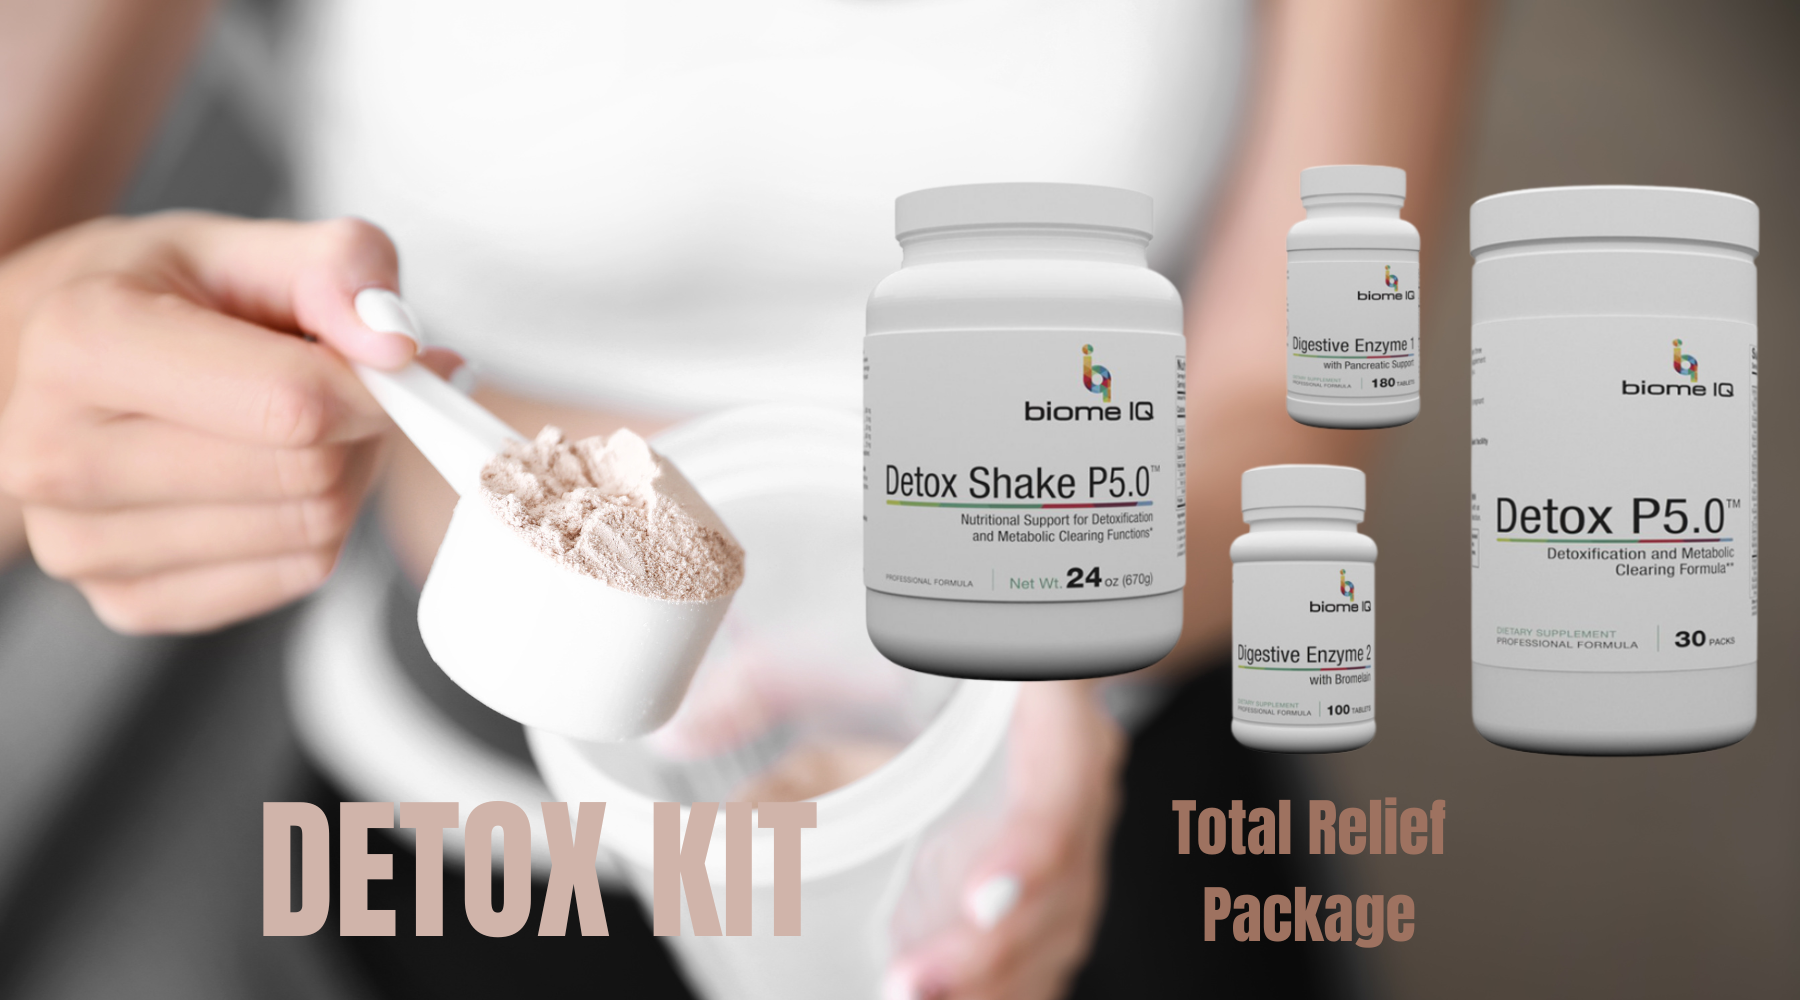 Detox Kit Total Relief Package